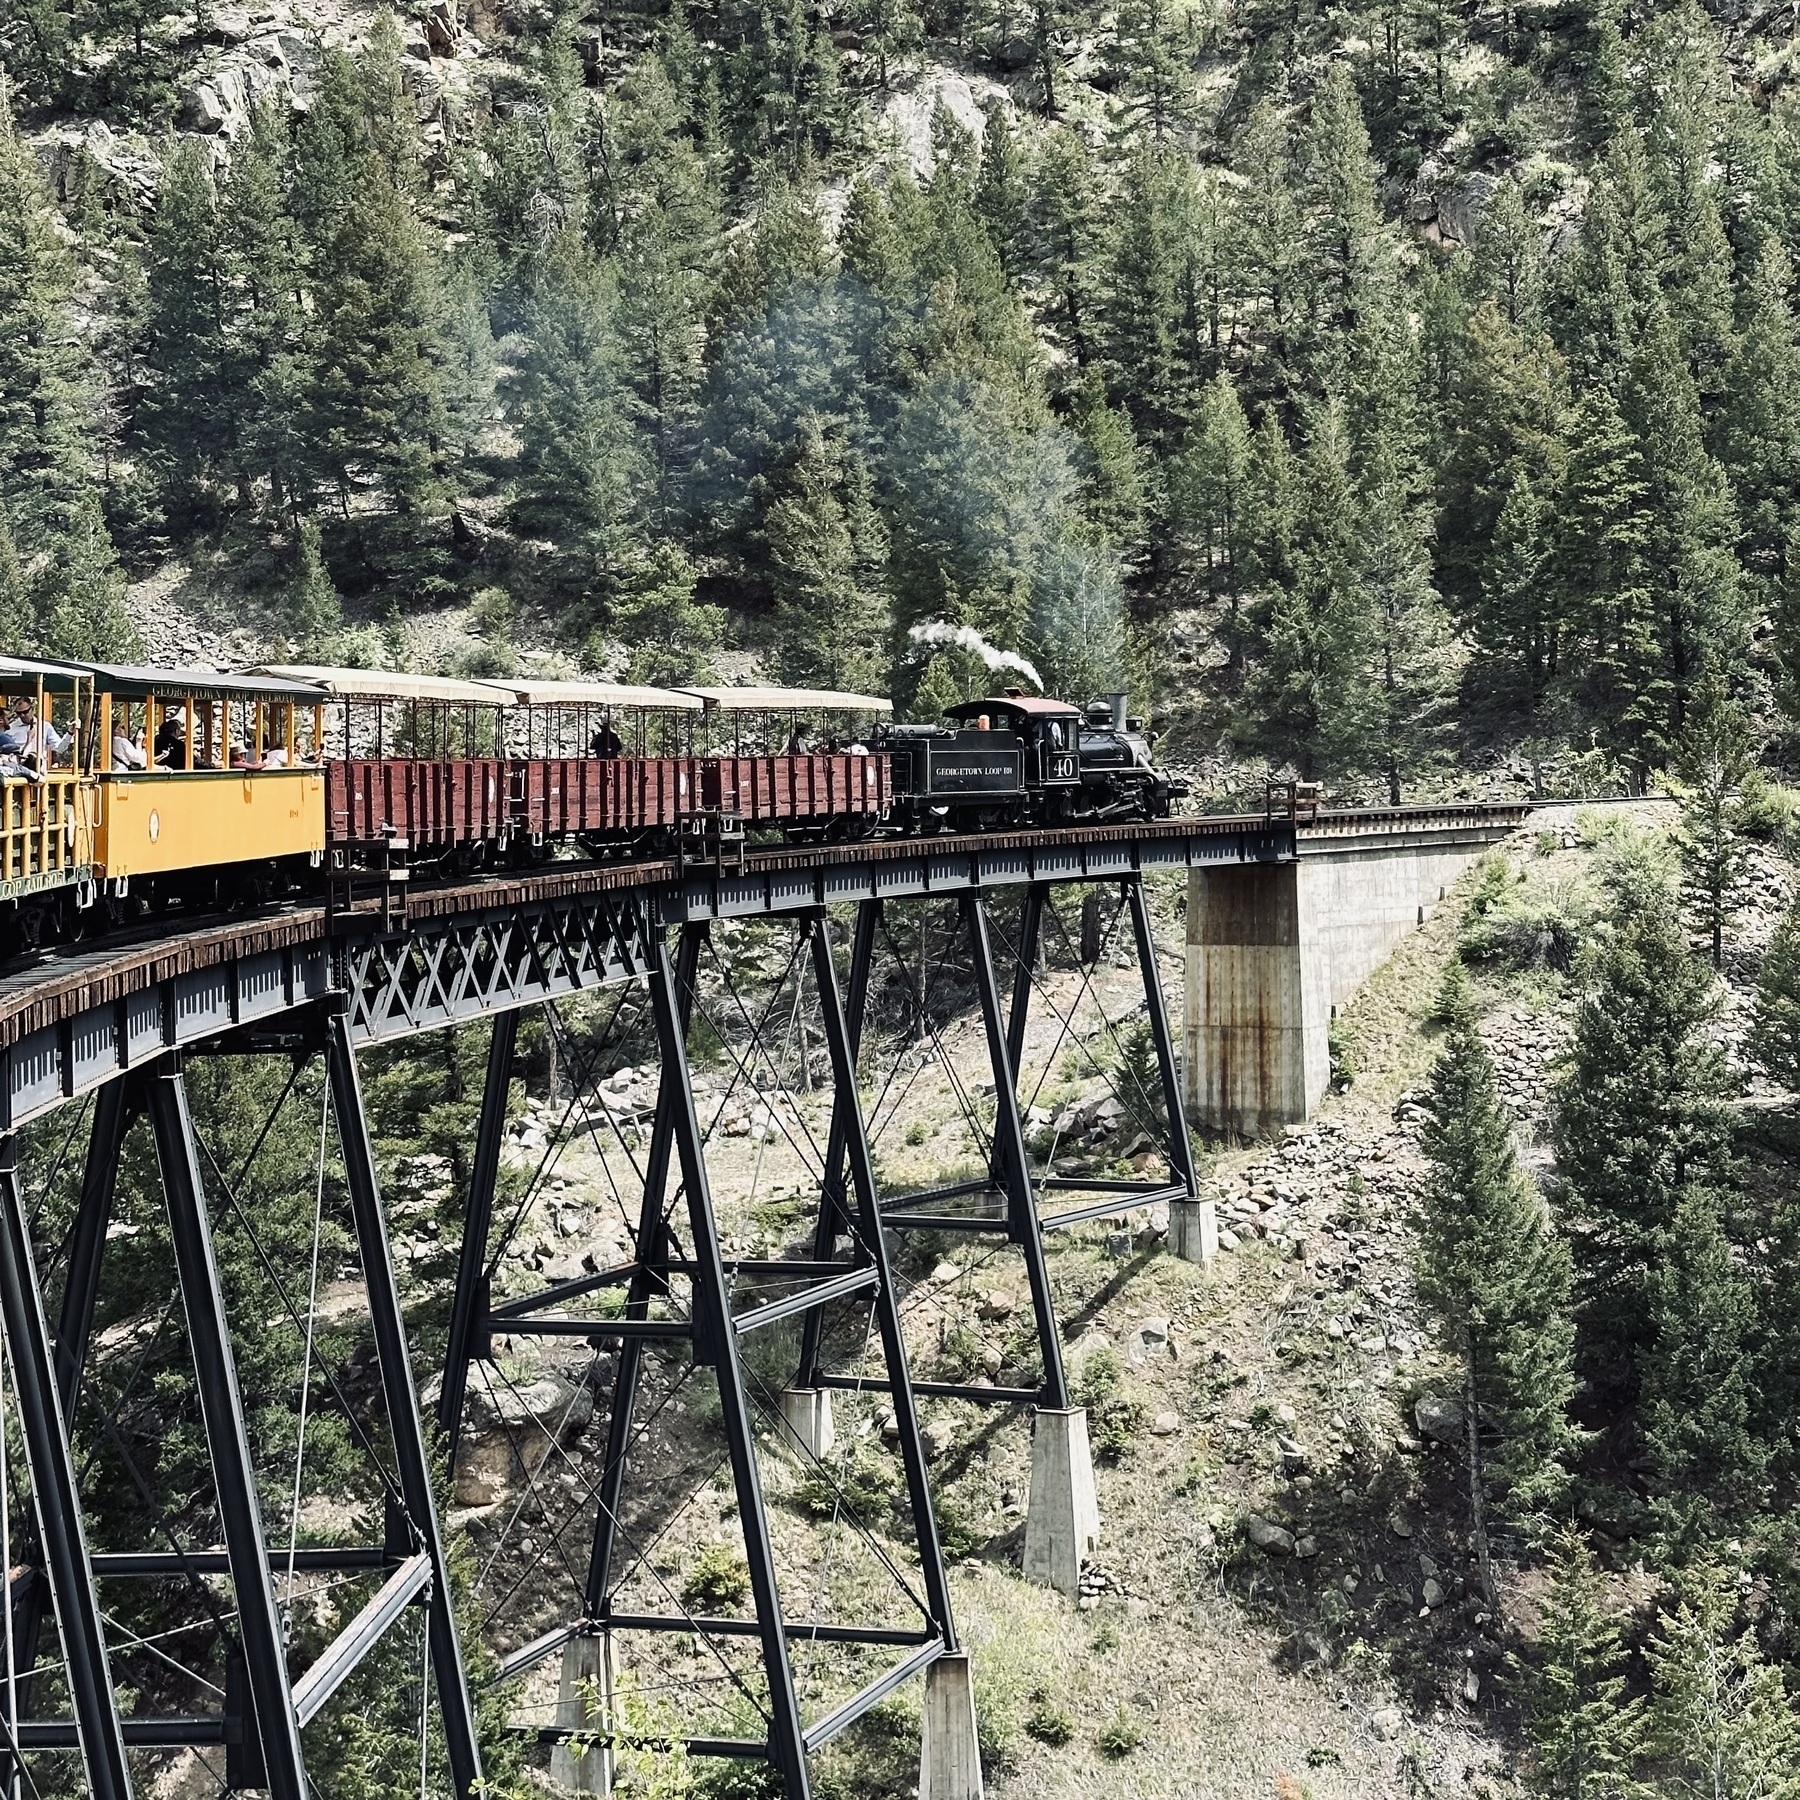 Train on high bridge in Colorado.